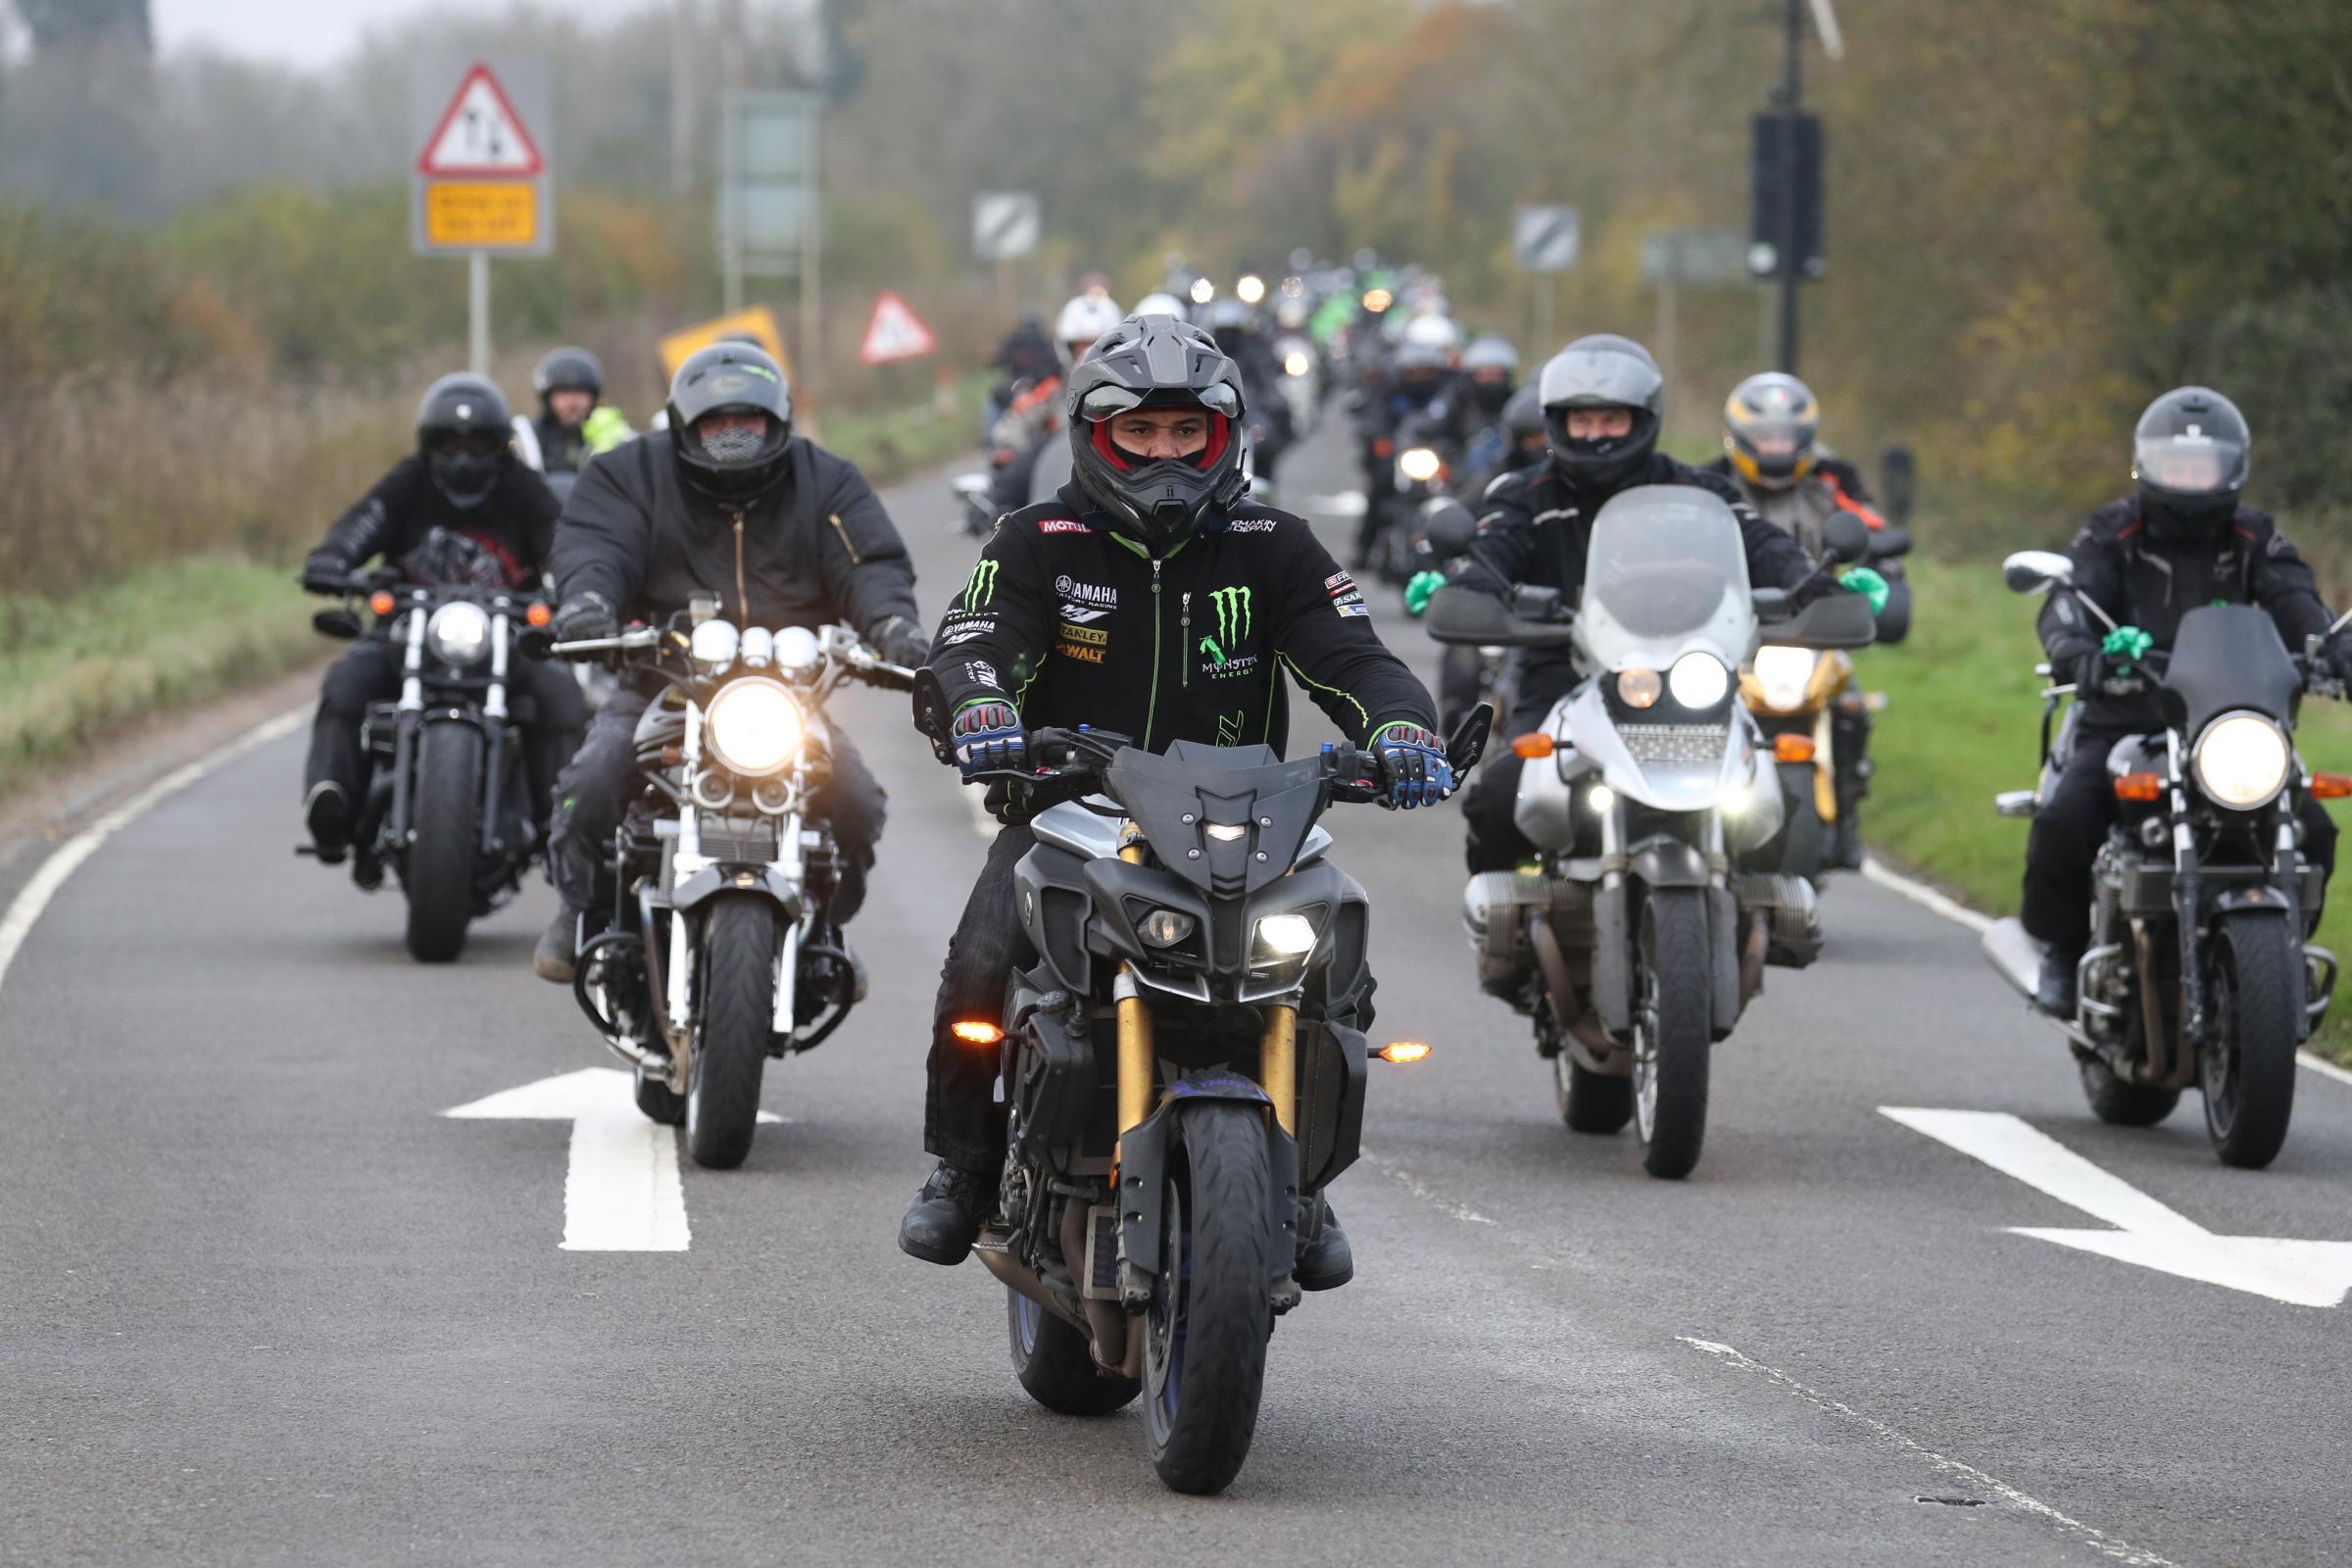 Motorbike convoy follows Harry Dunn's last ride - The Bolton News